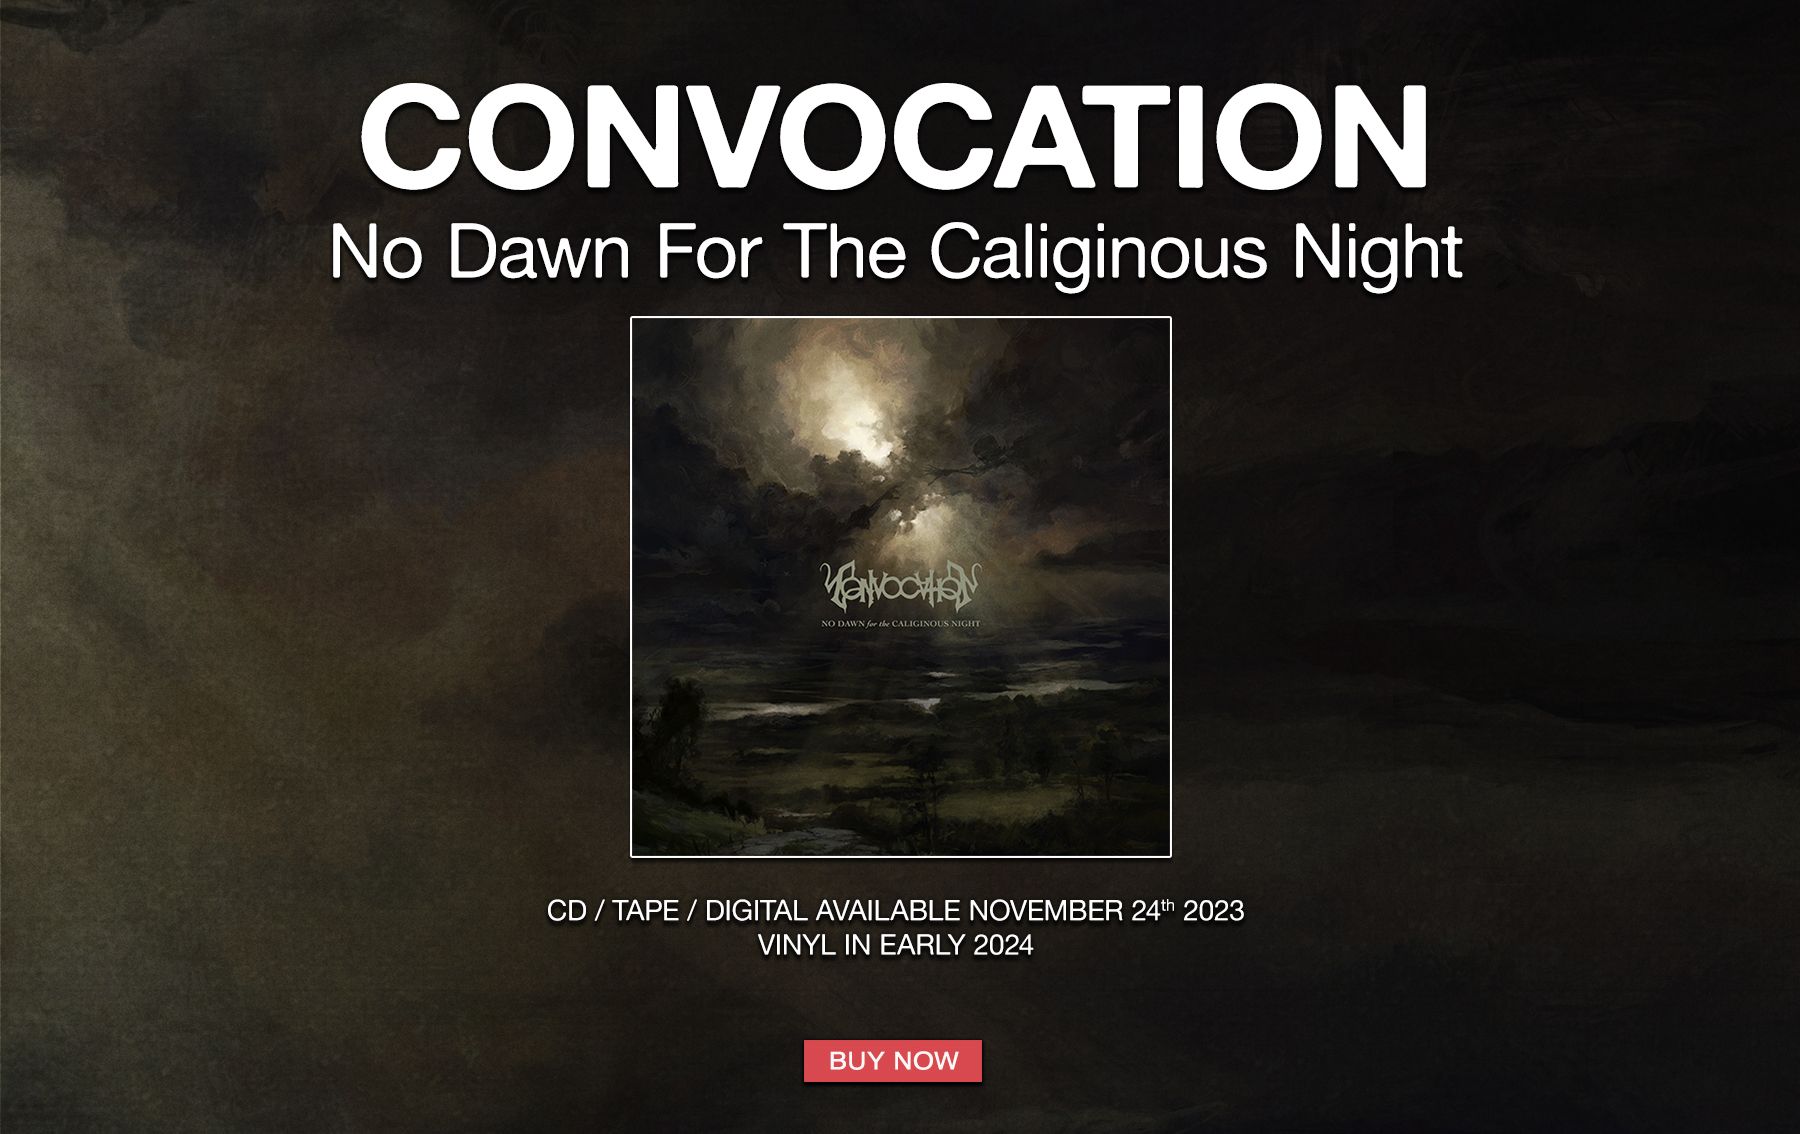 Convocation "No Dawn For the Caliginous Night" Pre-Orders!